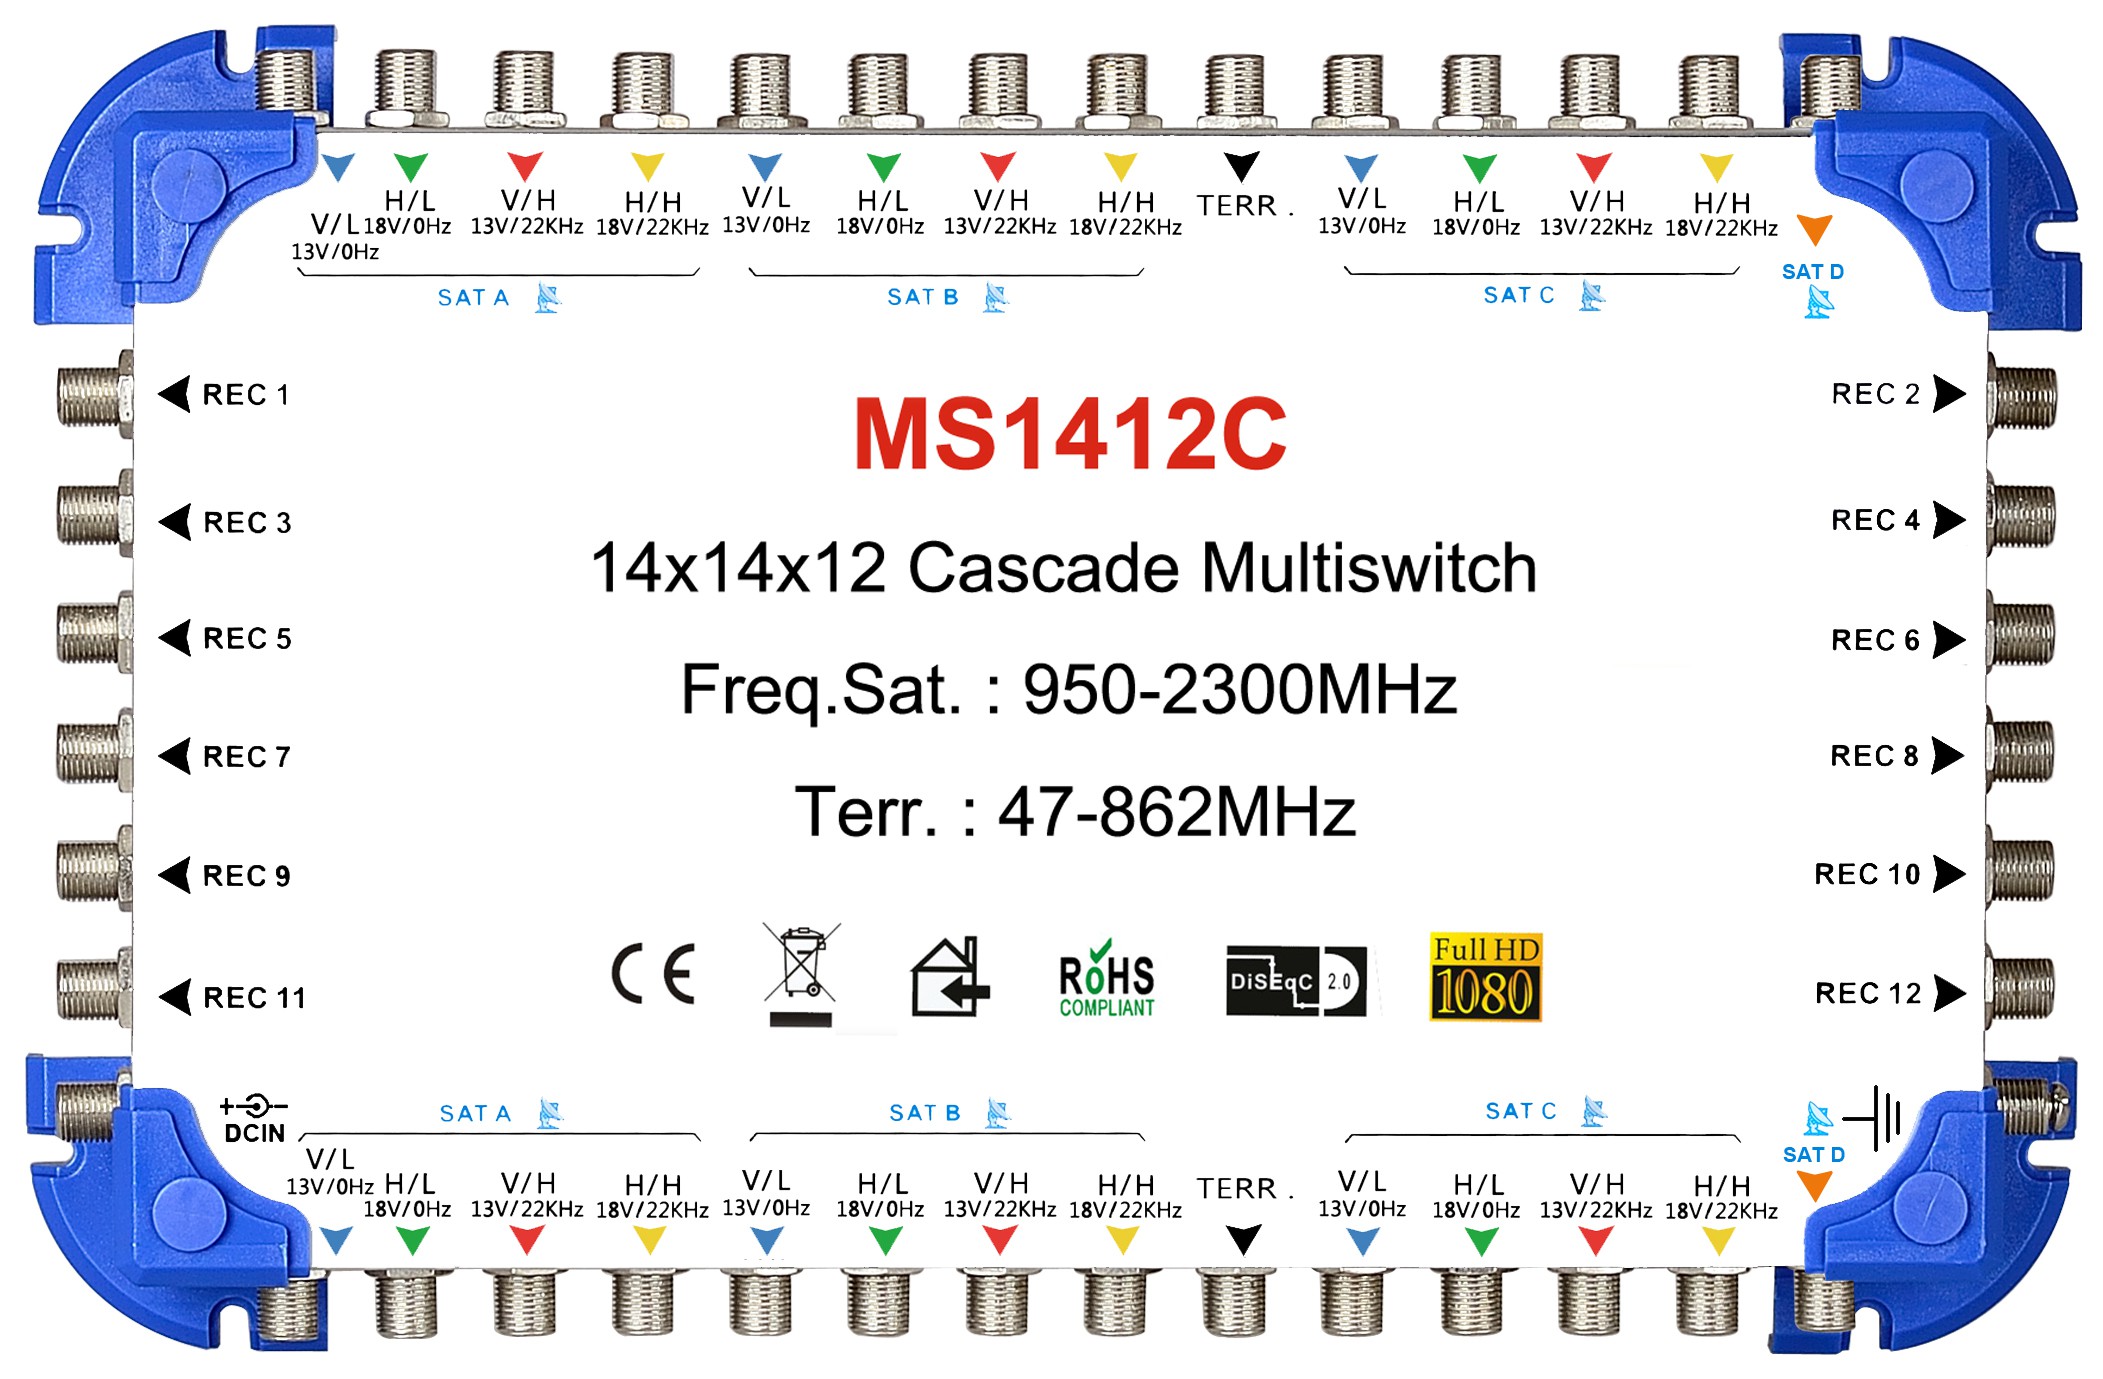 14x12 satellite multi-switch, Cascade multiswitch